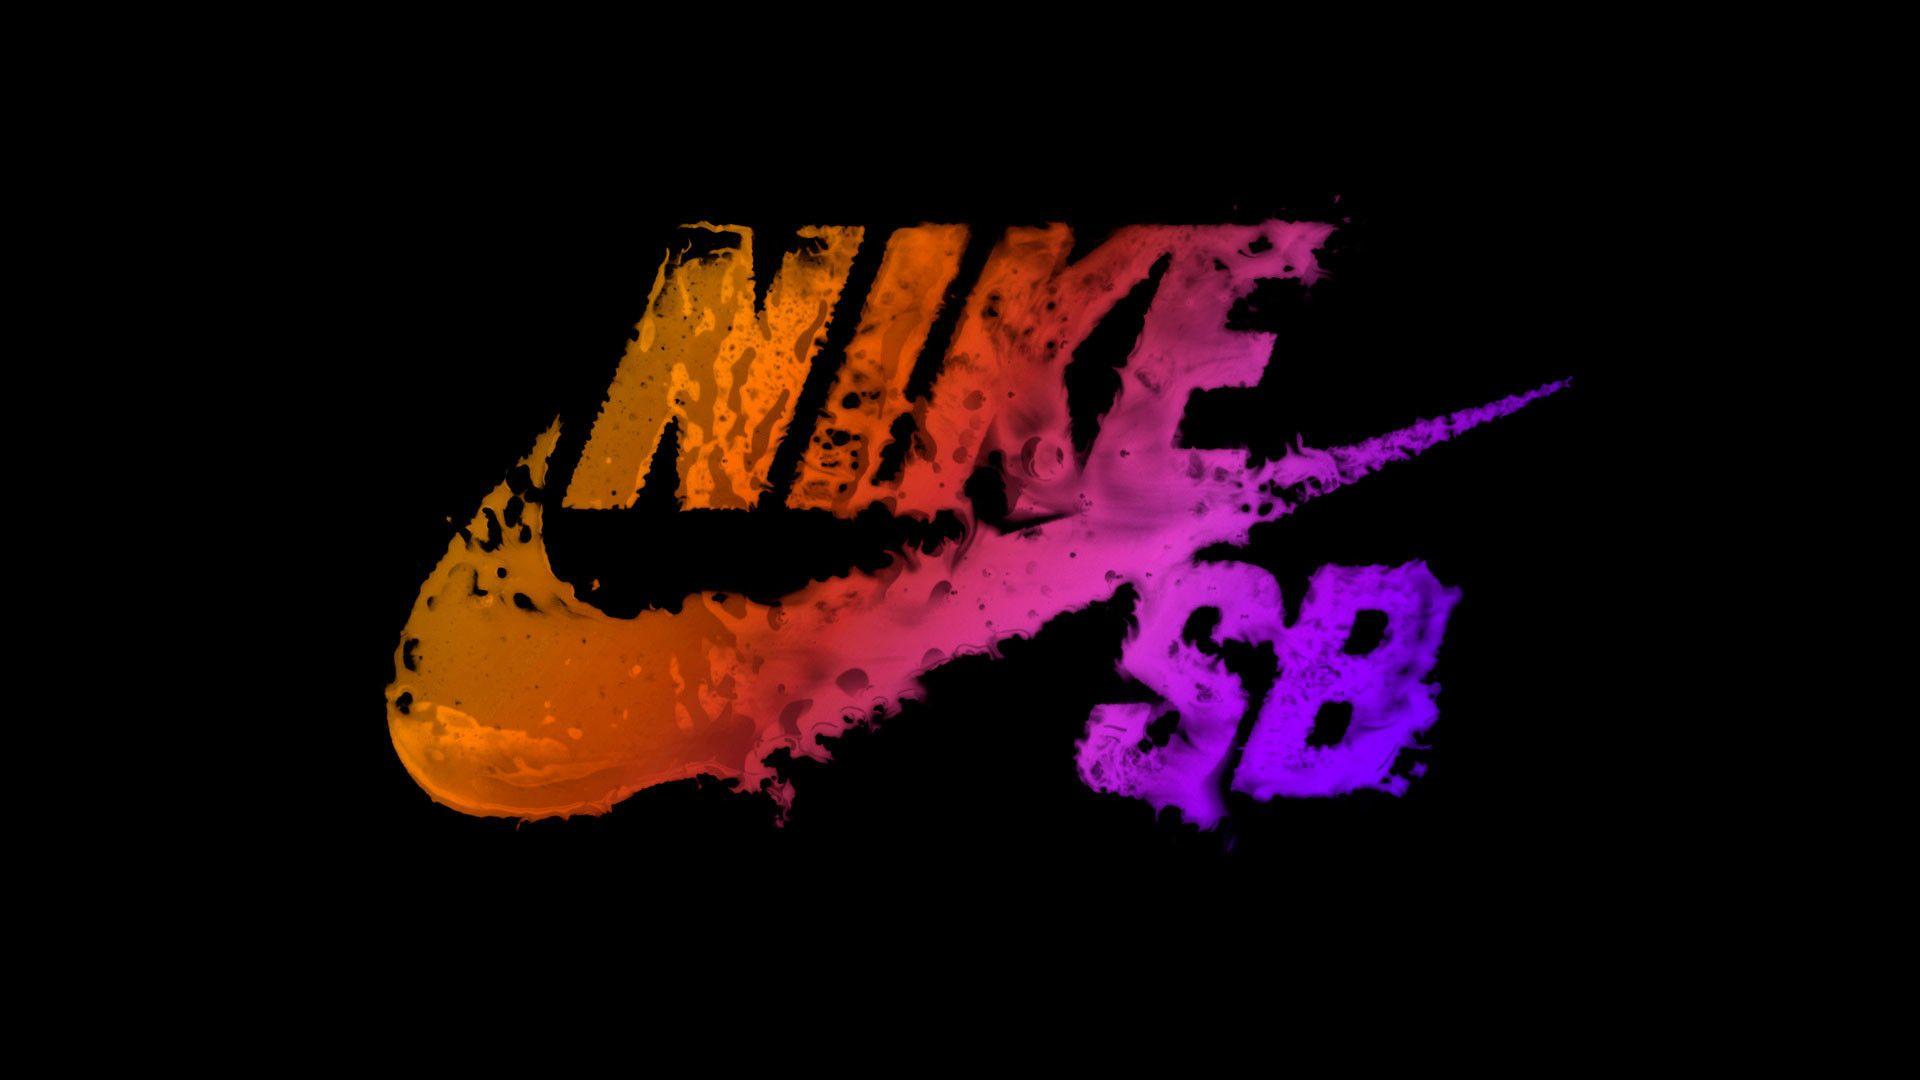 Nike Sb Wallpapers Top Free Nike Sb Backgrounds Wallpaperaccess